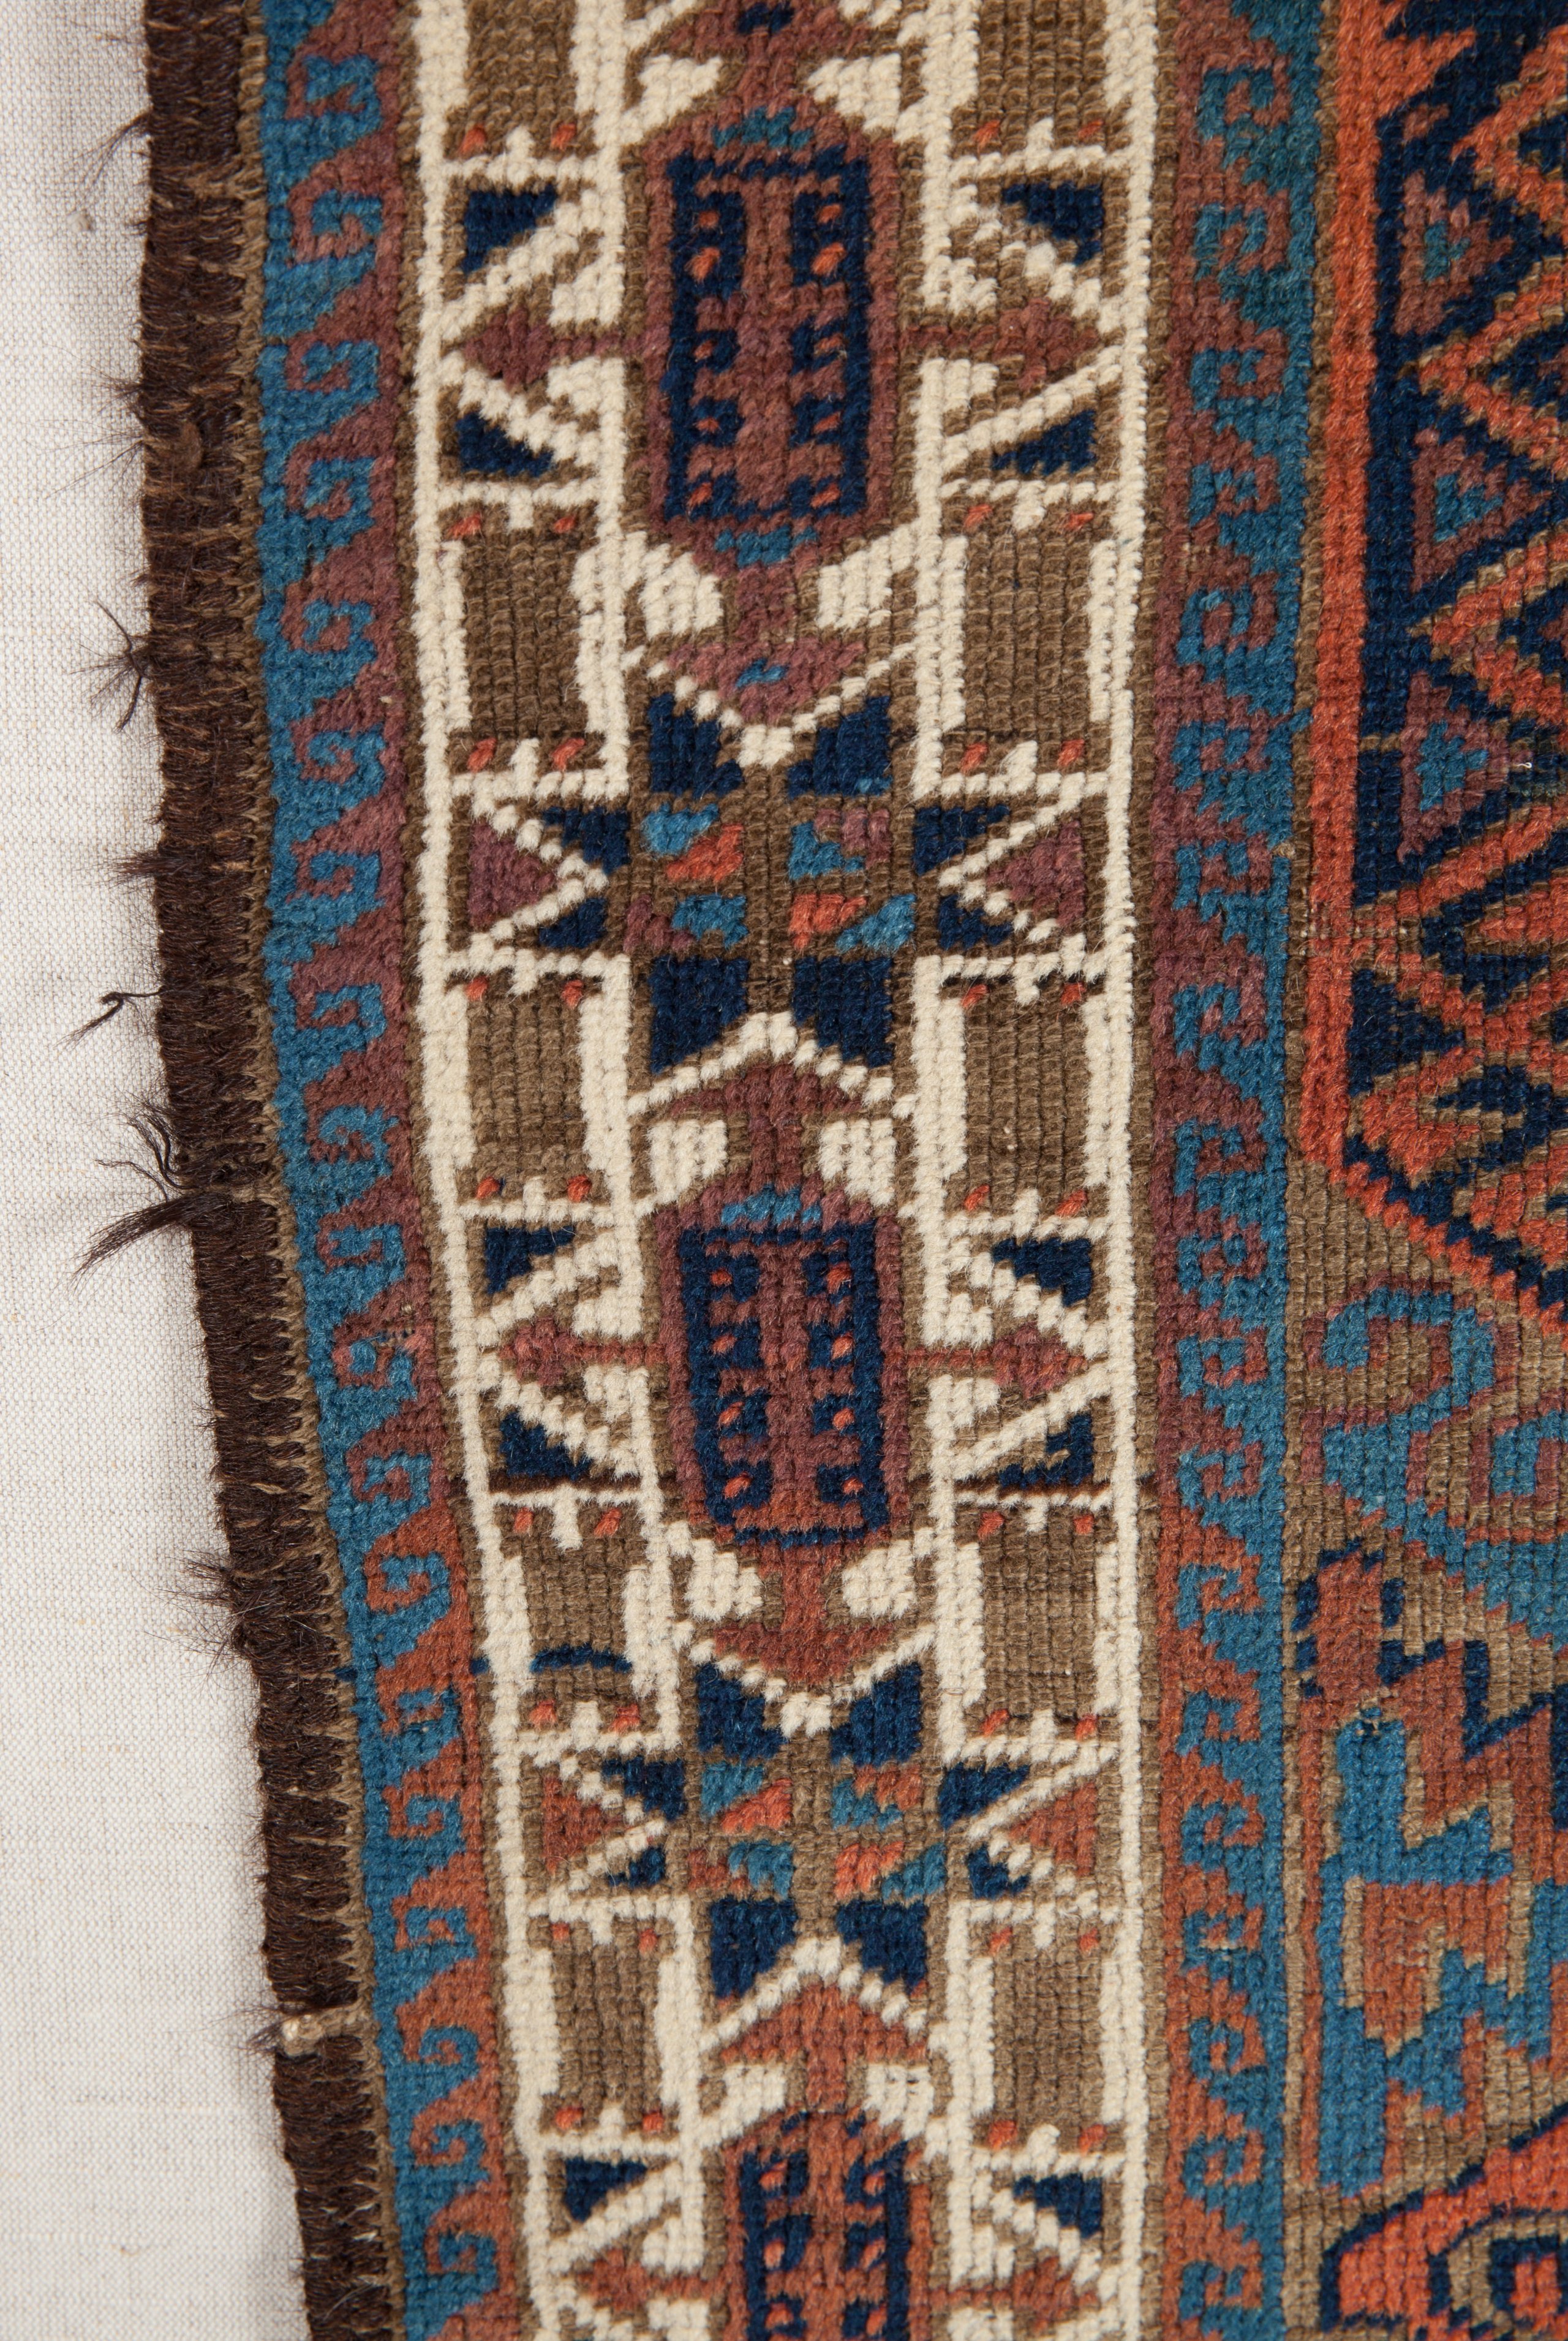 Powerhouse Collection - Mashwani design rug, western Afghanistan